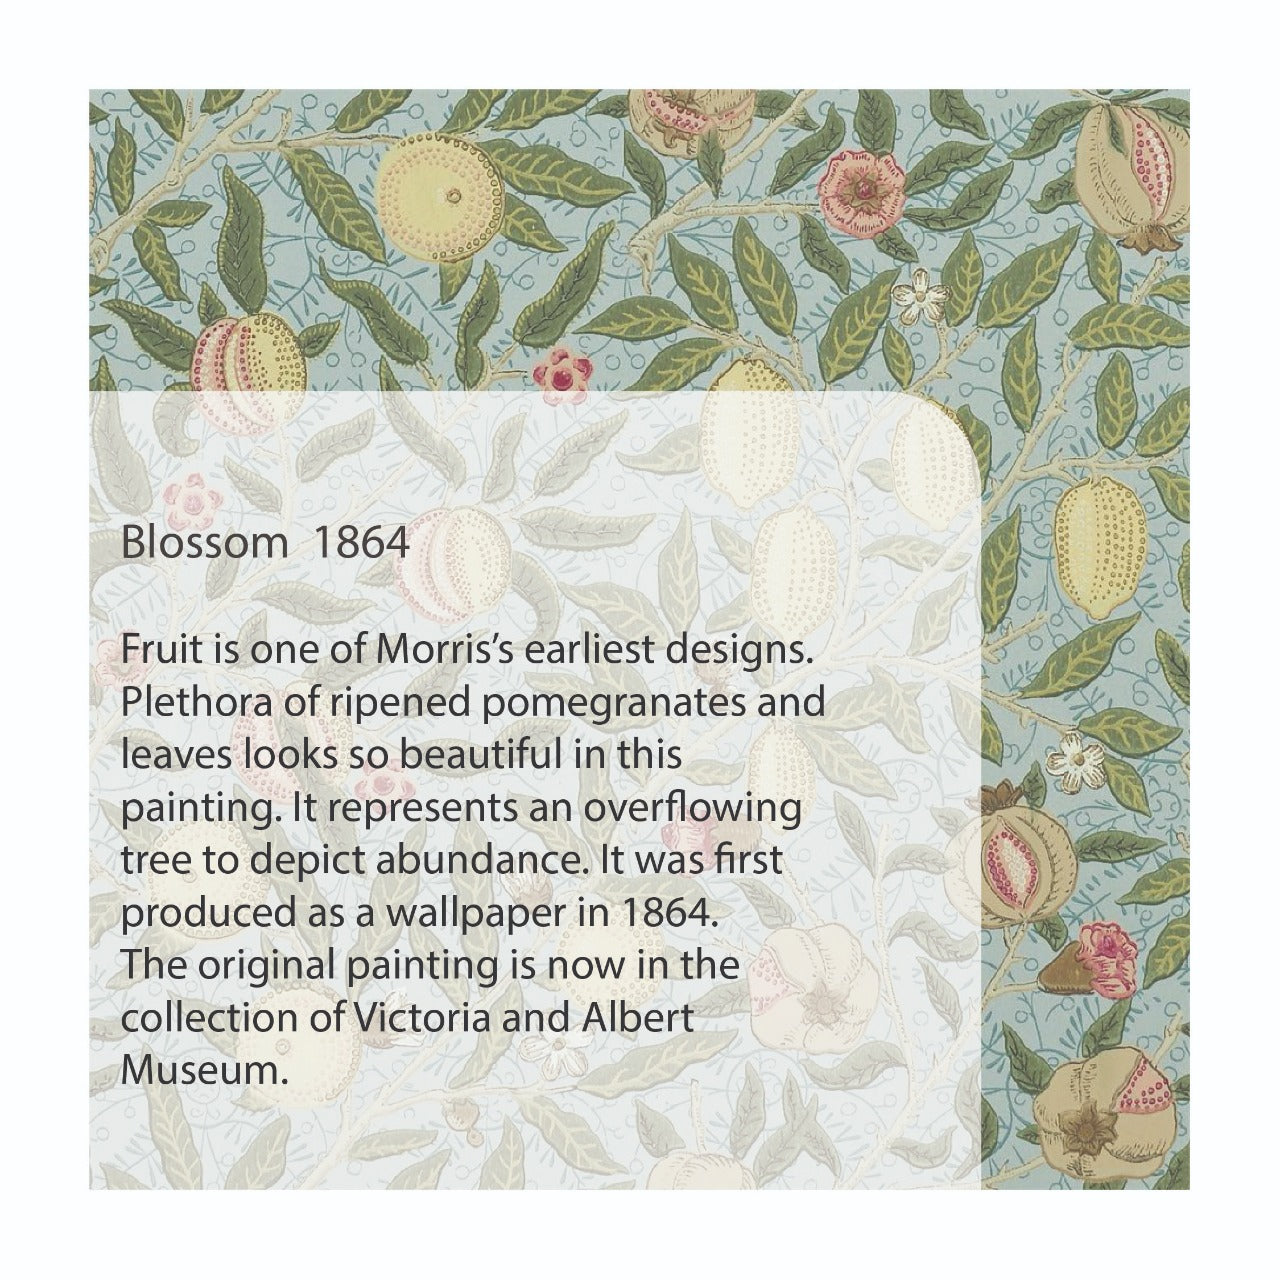 William Morris - Blossom Pod Silver Finger Ring by Moha